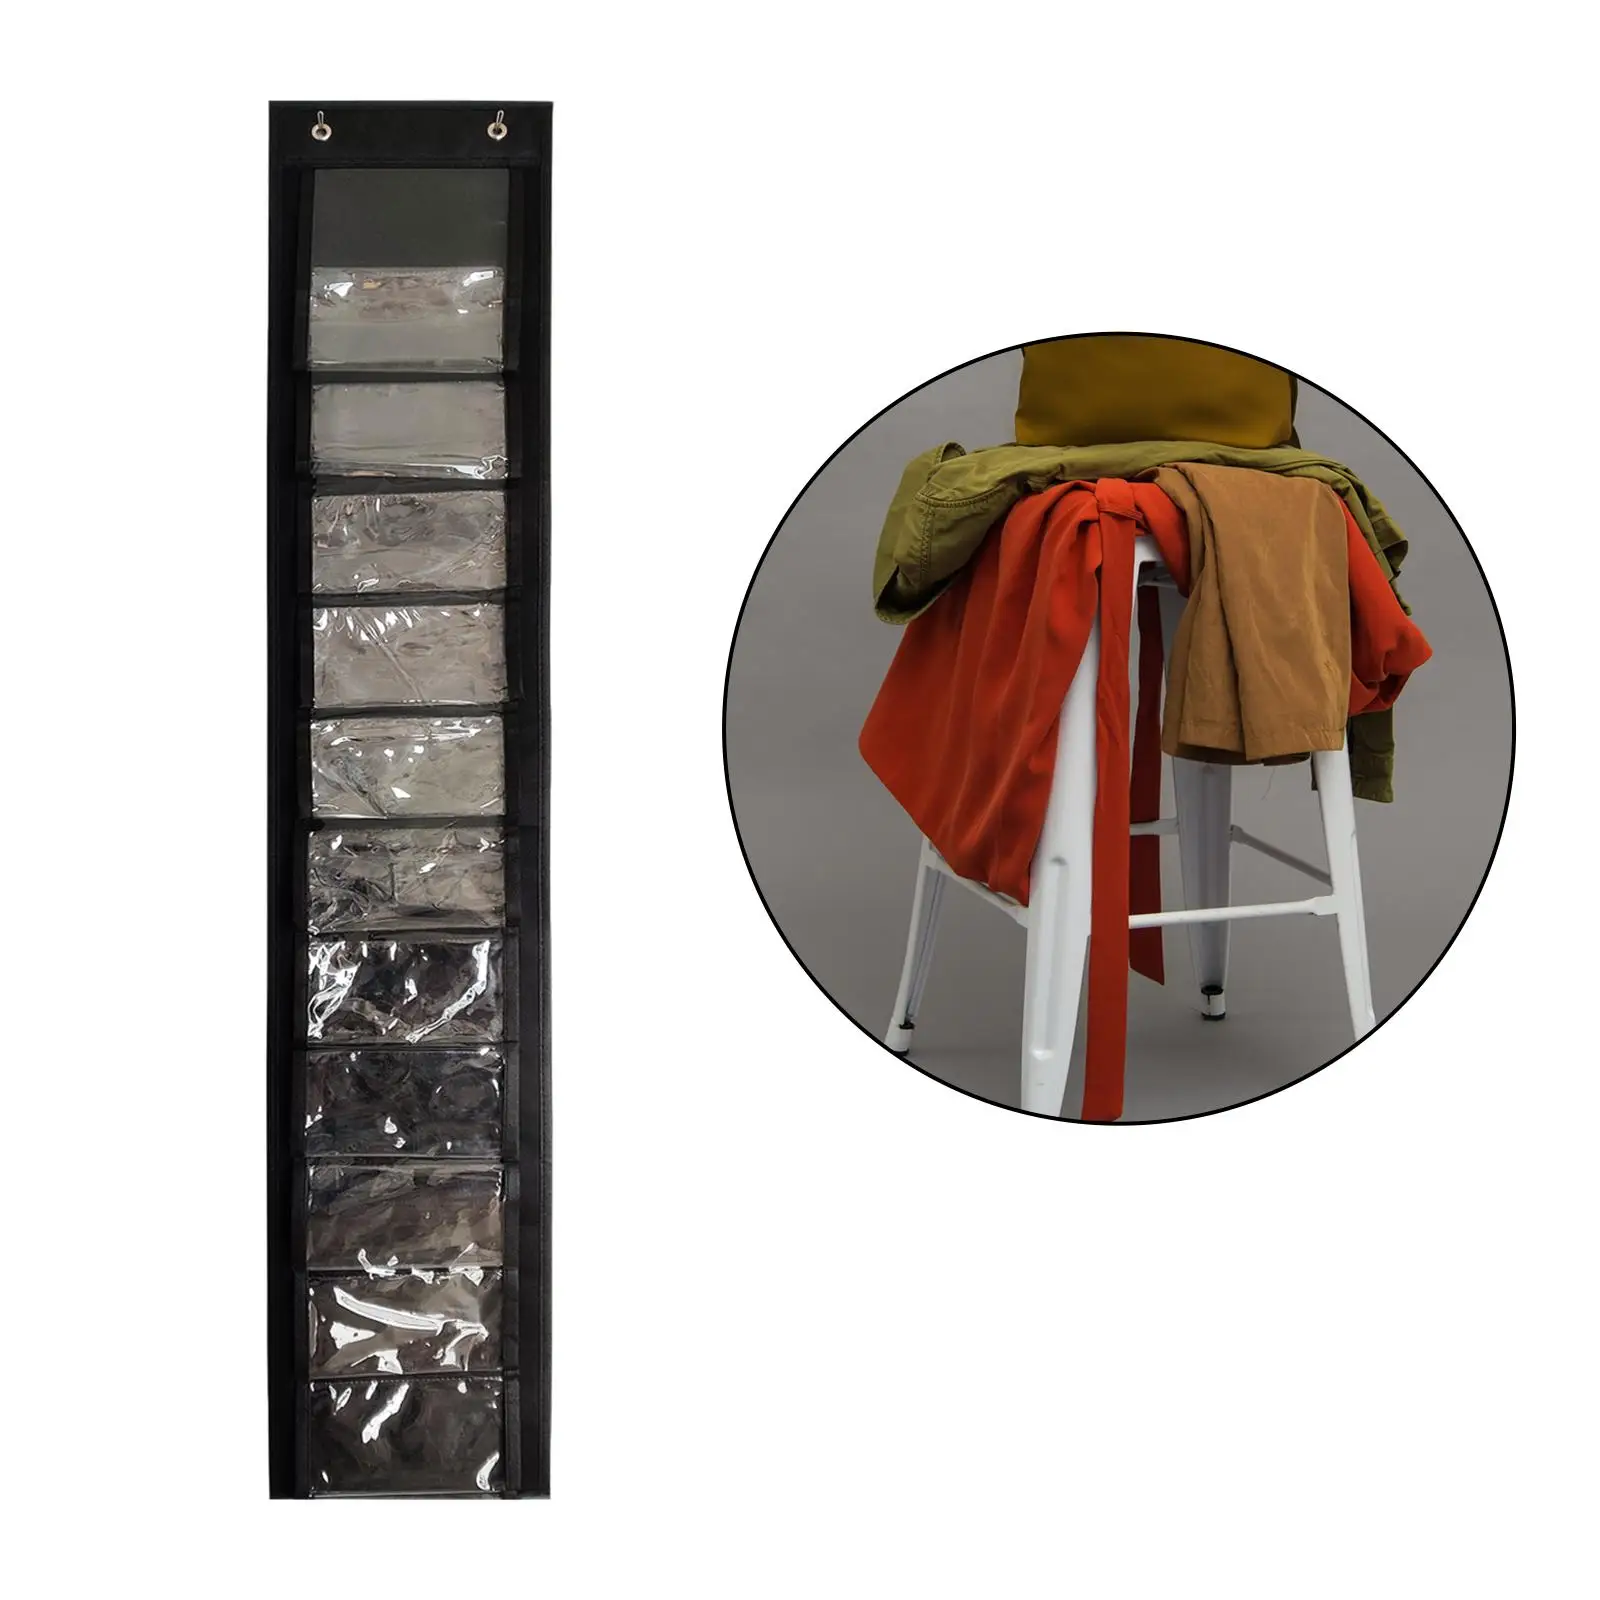 Household Leggings Organizer Saving Space Hanging Storage Bag Over The Door Towel Rack for Leggings Home Organizer Rack Hanging